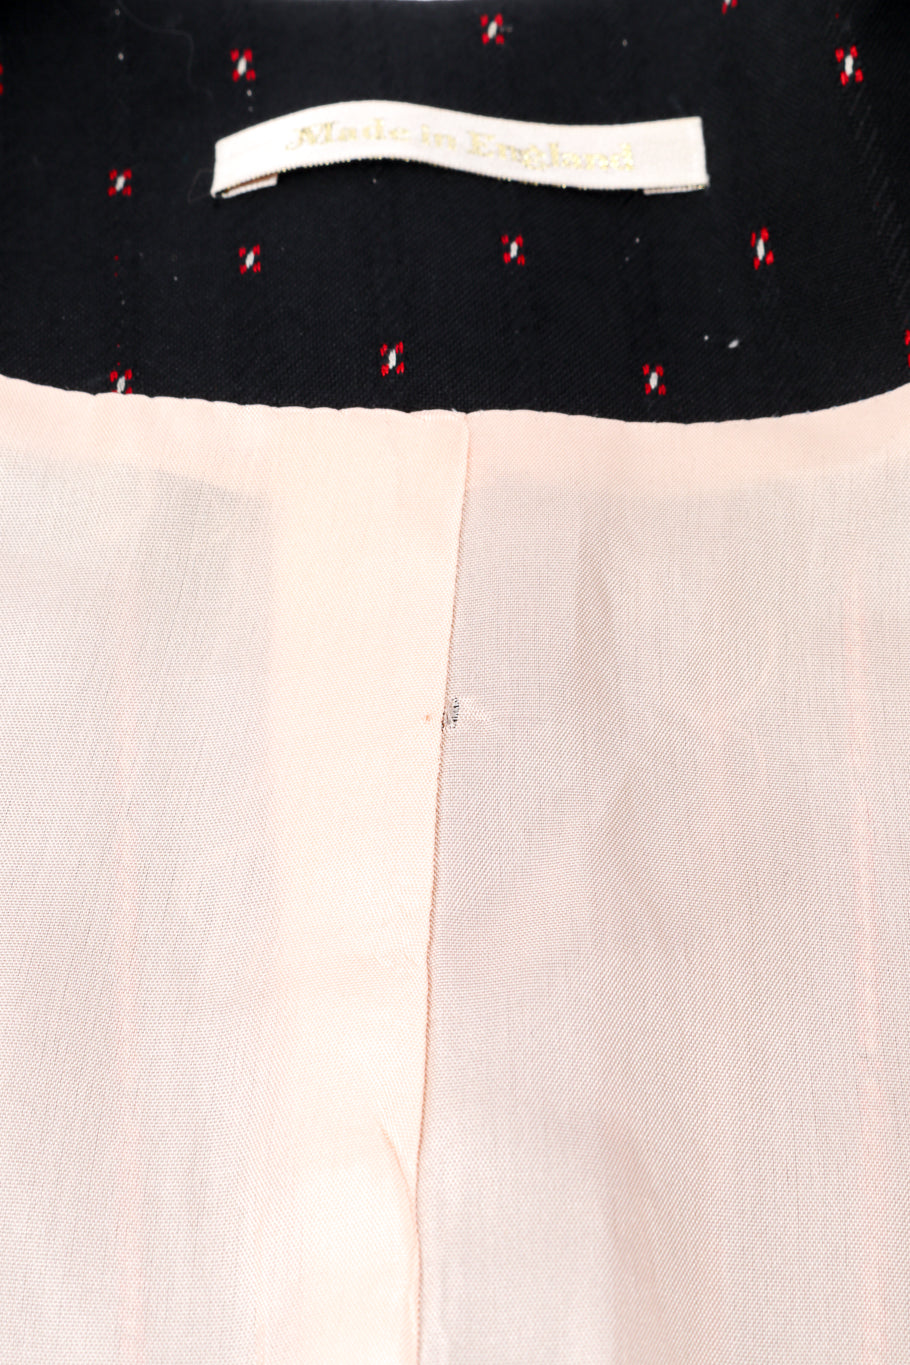 Peplum Flare Jacket & Skirt Suit by Vivienne Westwood lining snag @recessla